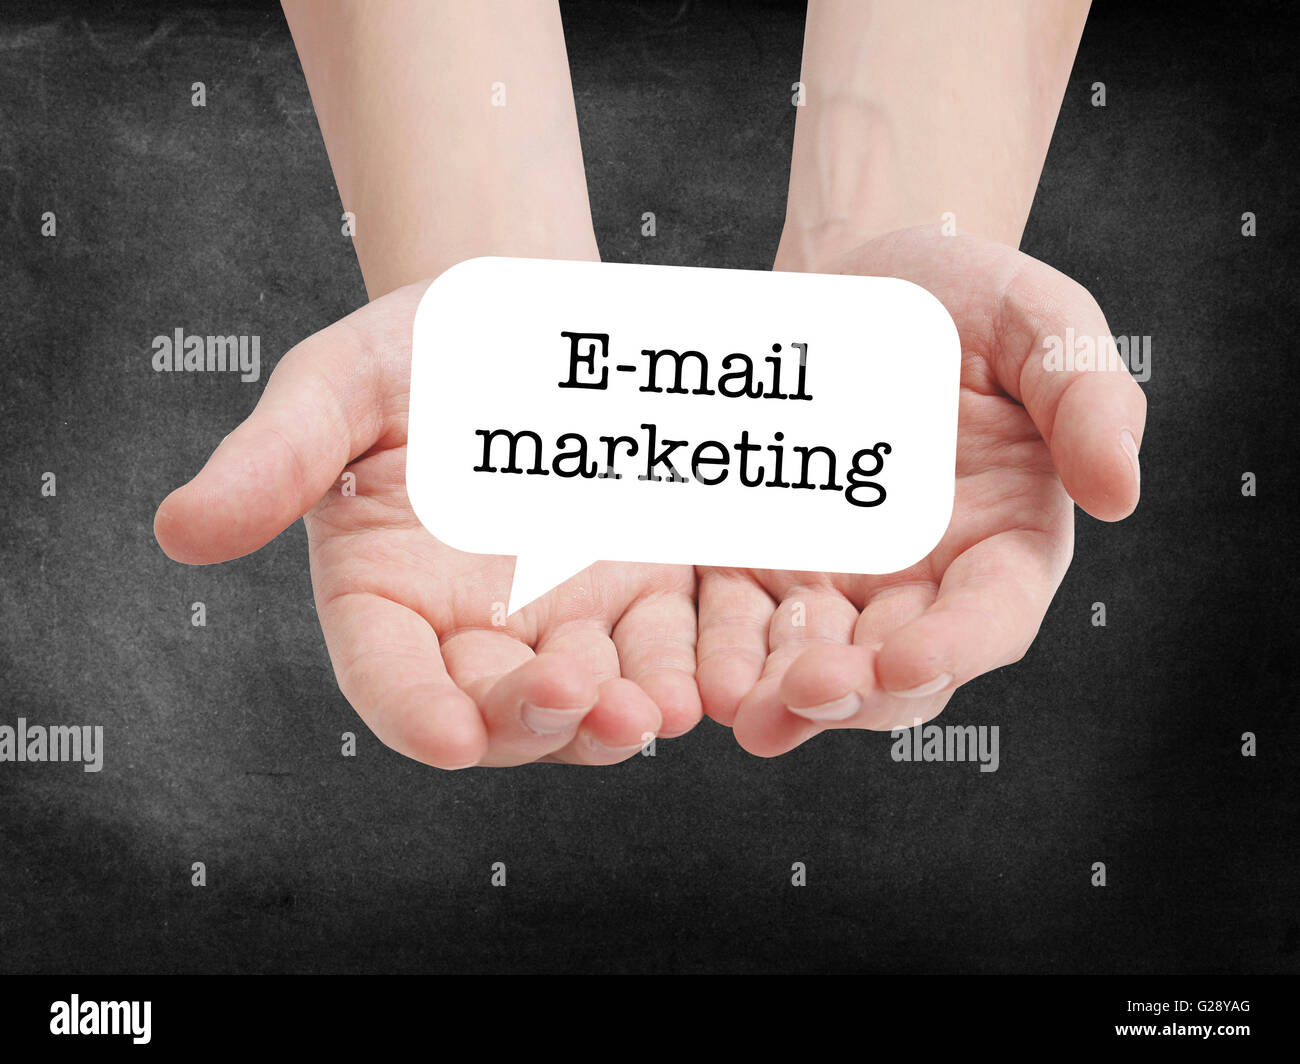 Email marketing written on a speechbubble Stock Photo